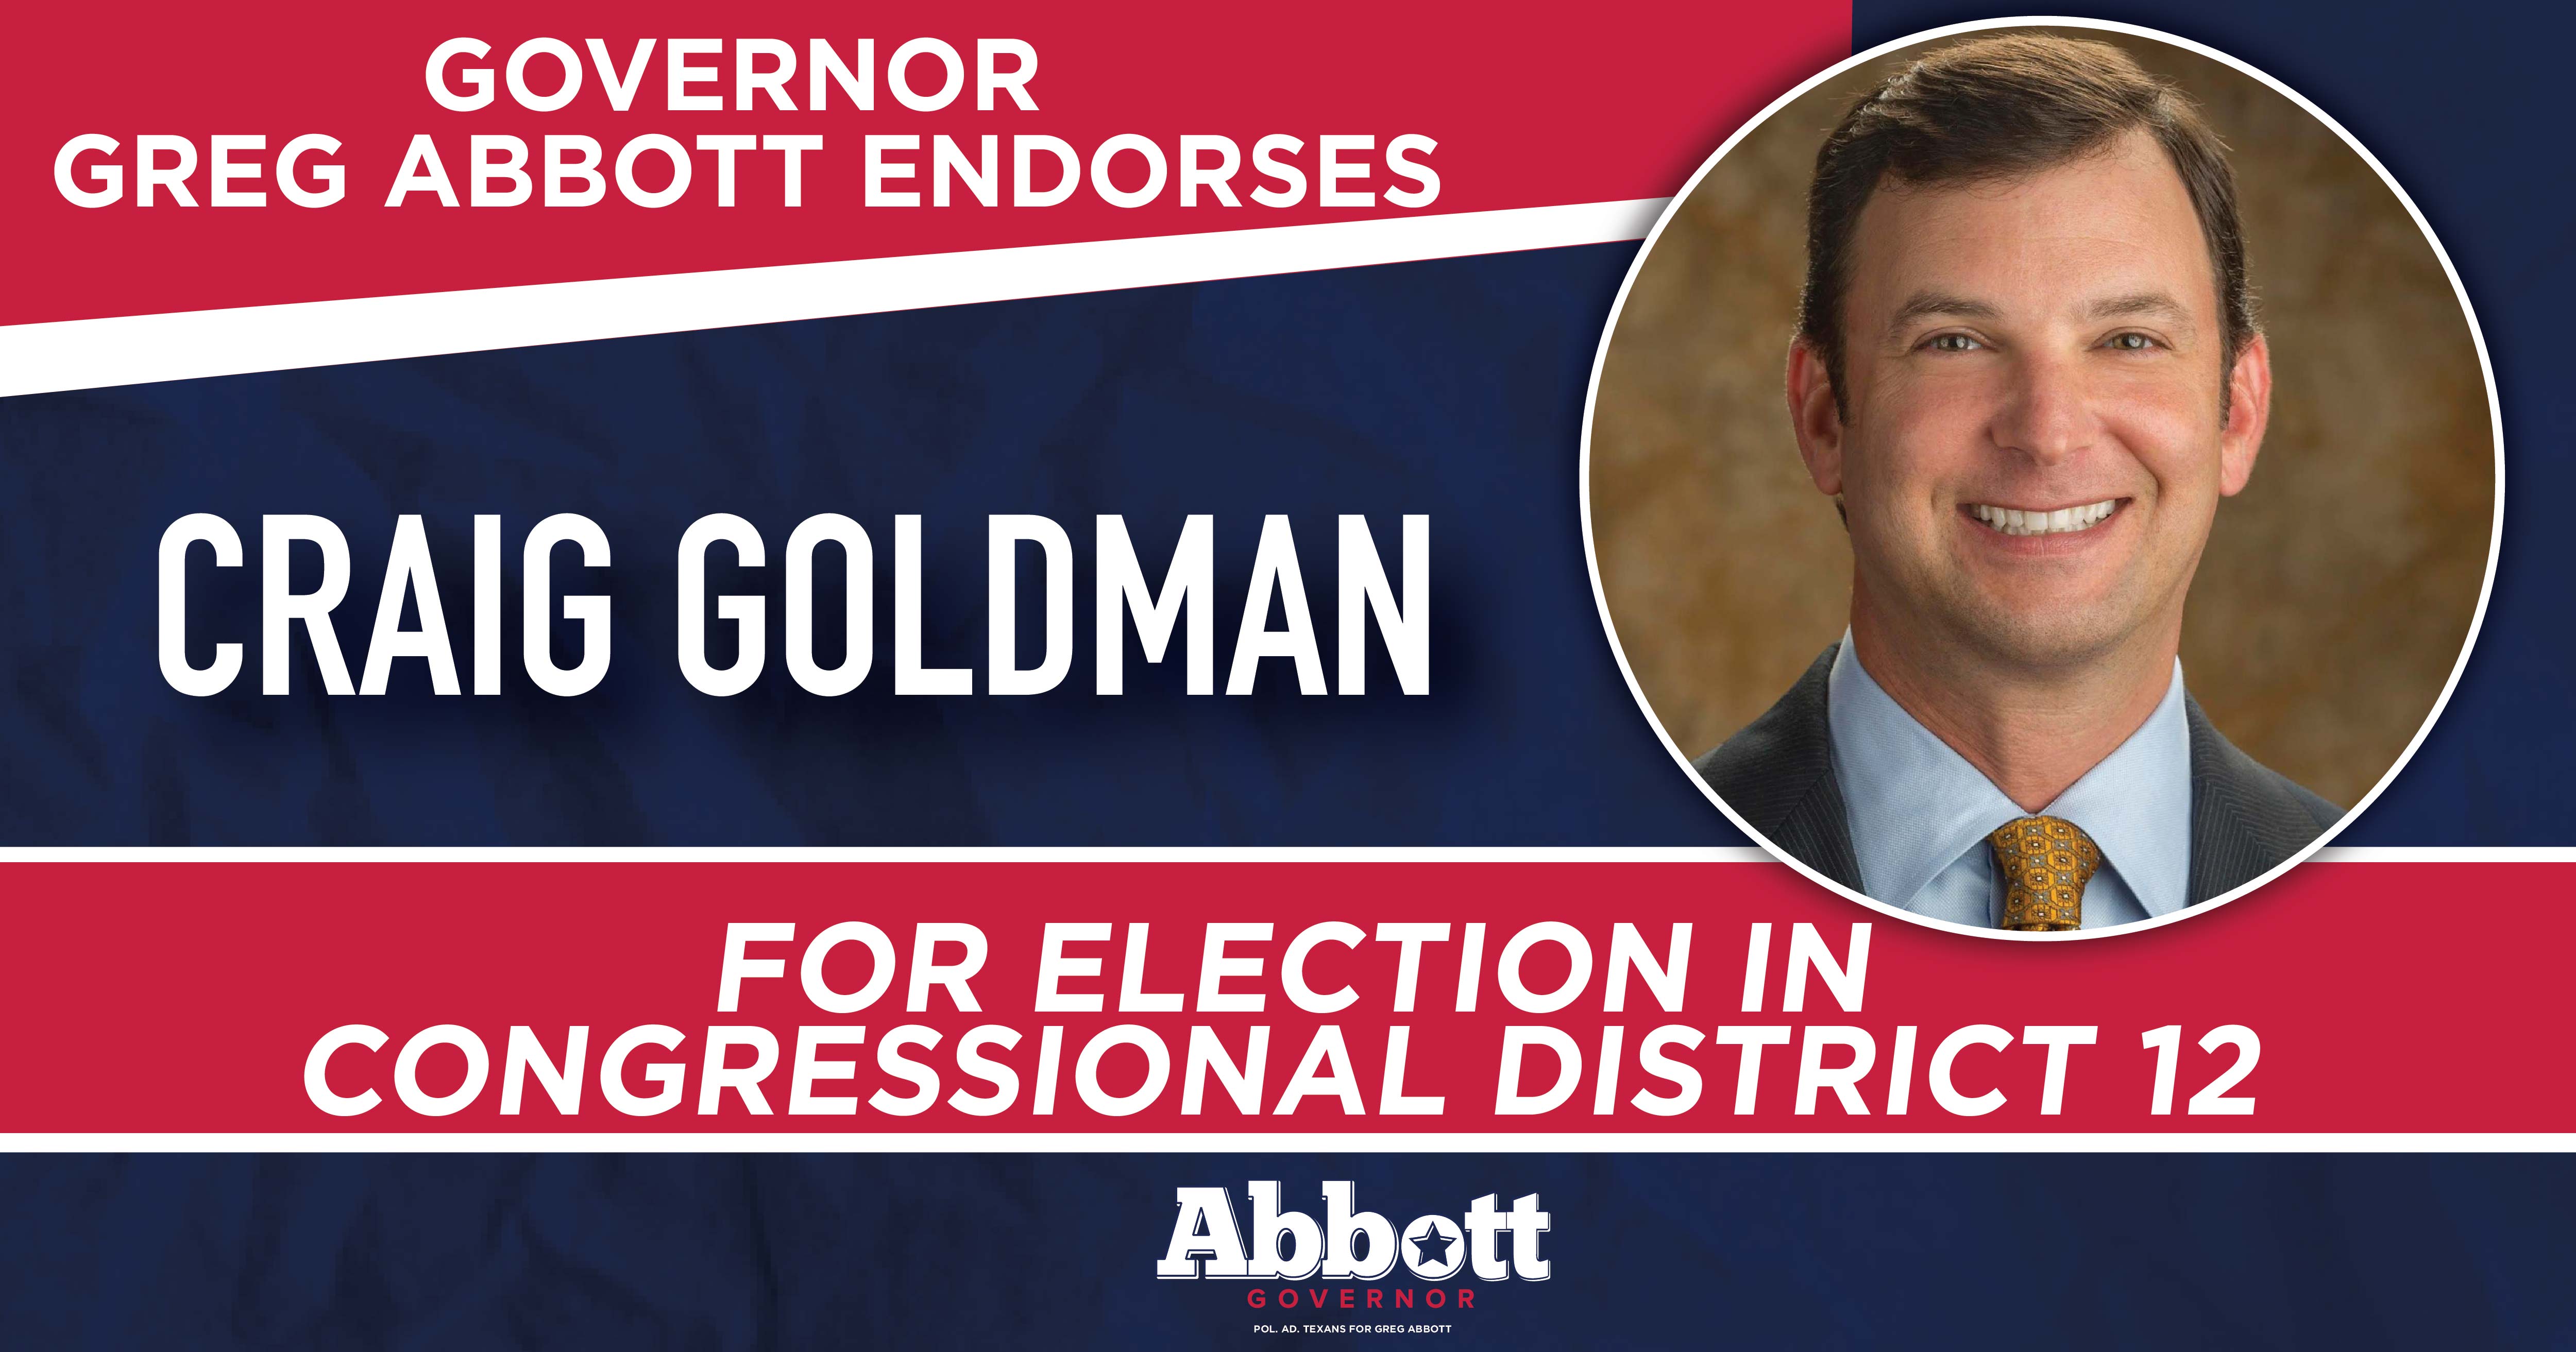 Governor Abbott Endorses Craig Goldman For Congressional District 12 ...